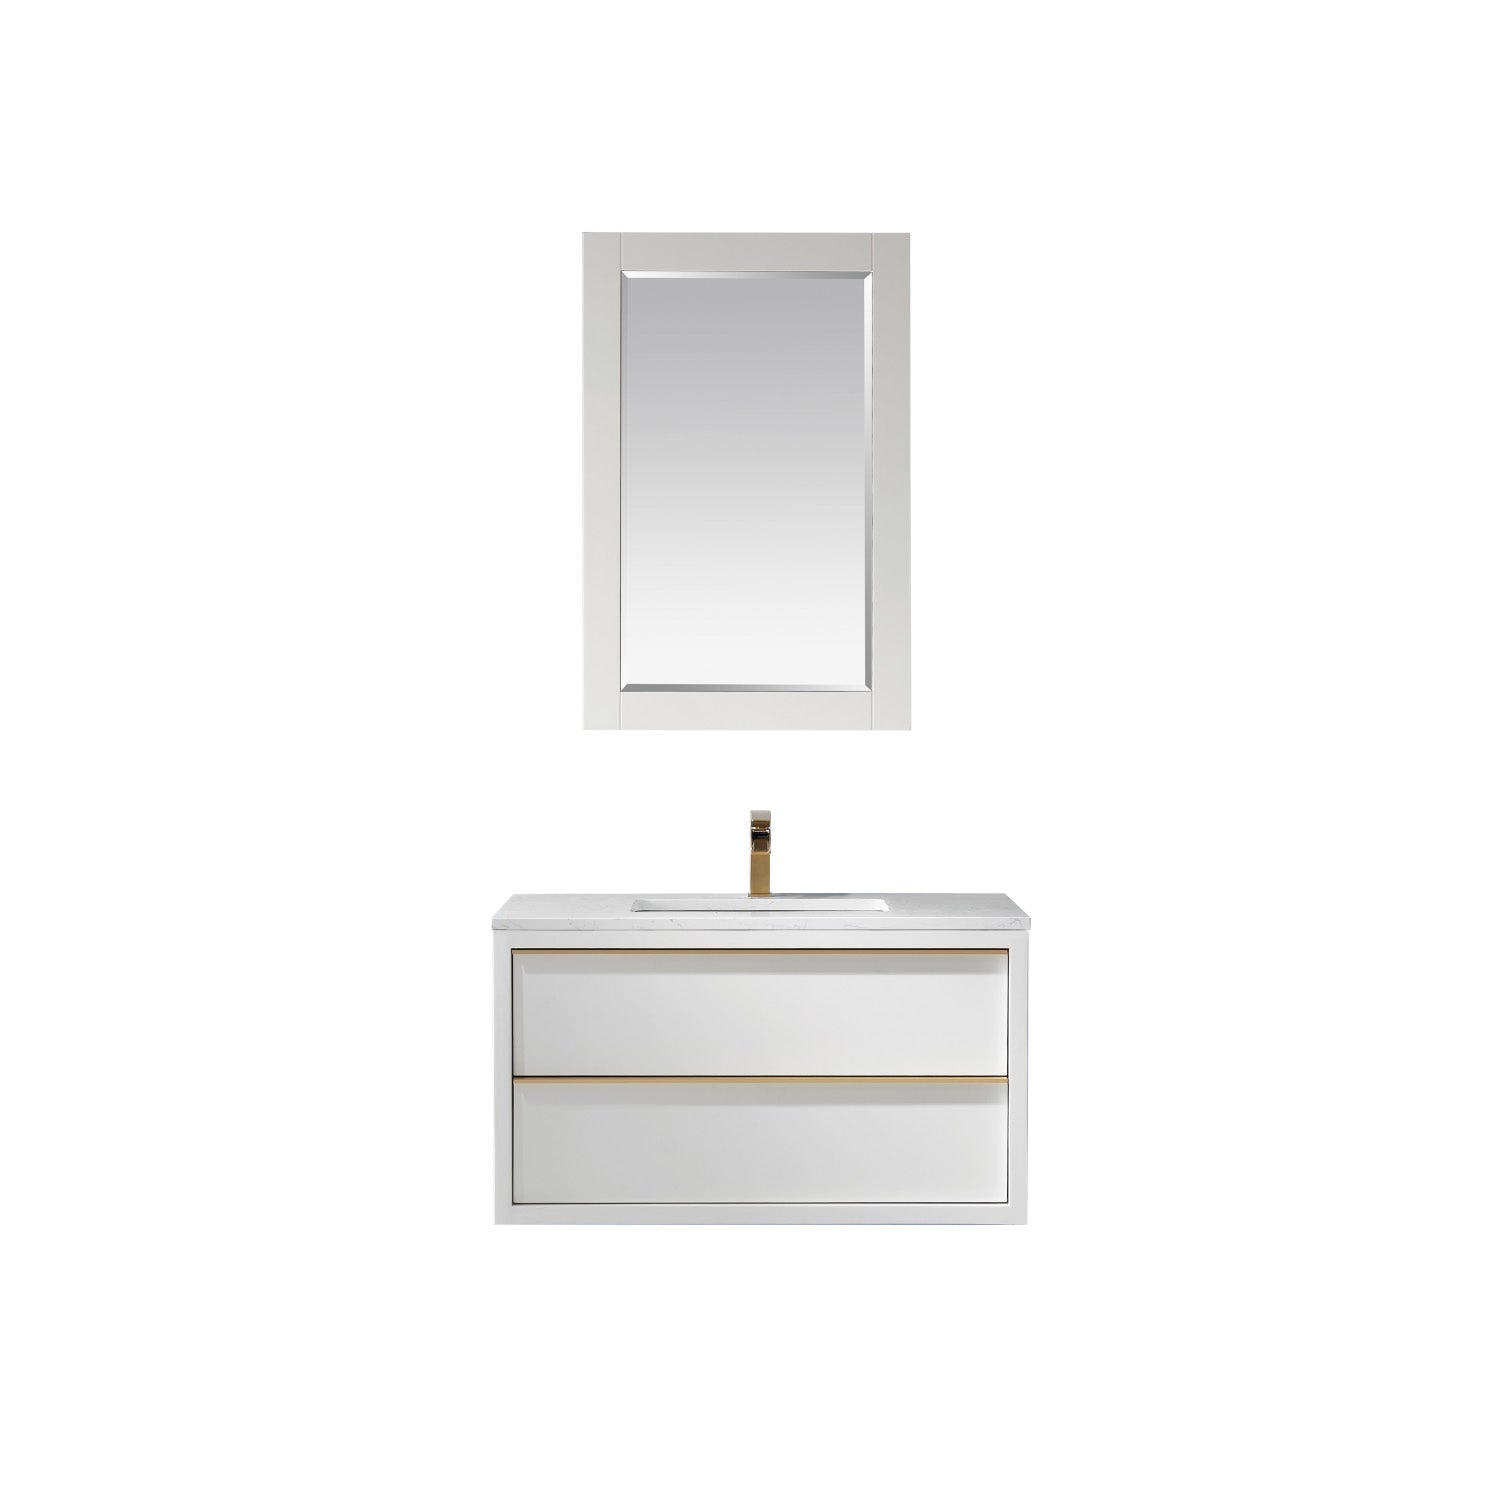 Morgan 36" Single Bathroom Vanity Set in White and Composite Aosta White Stone Countertop